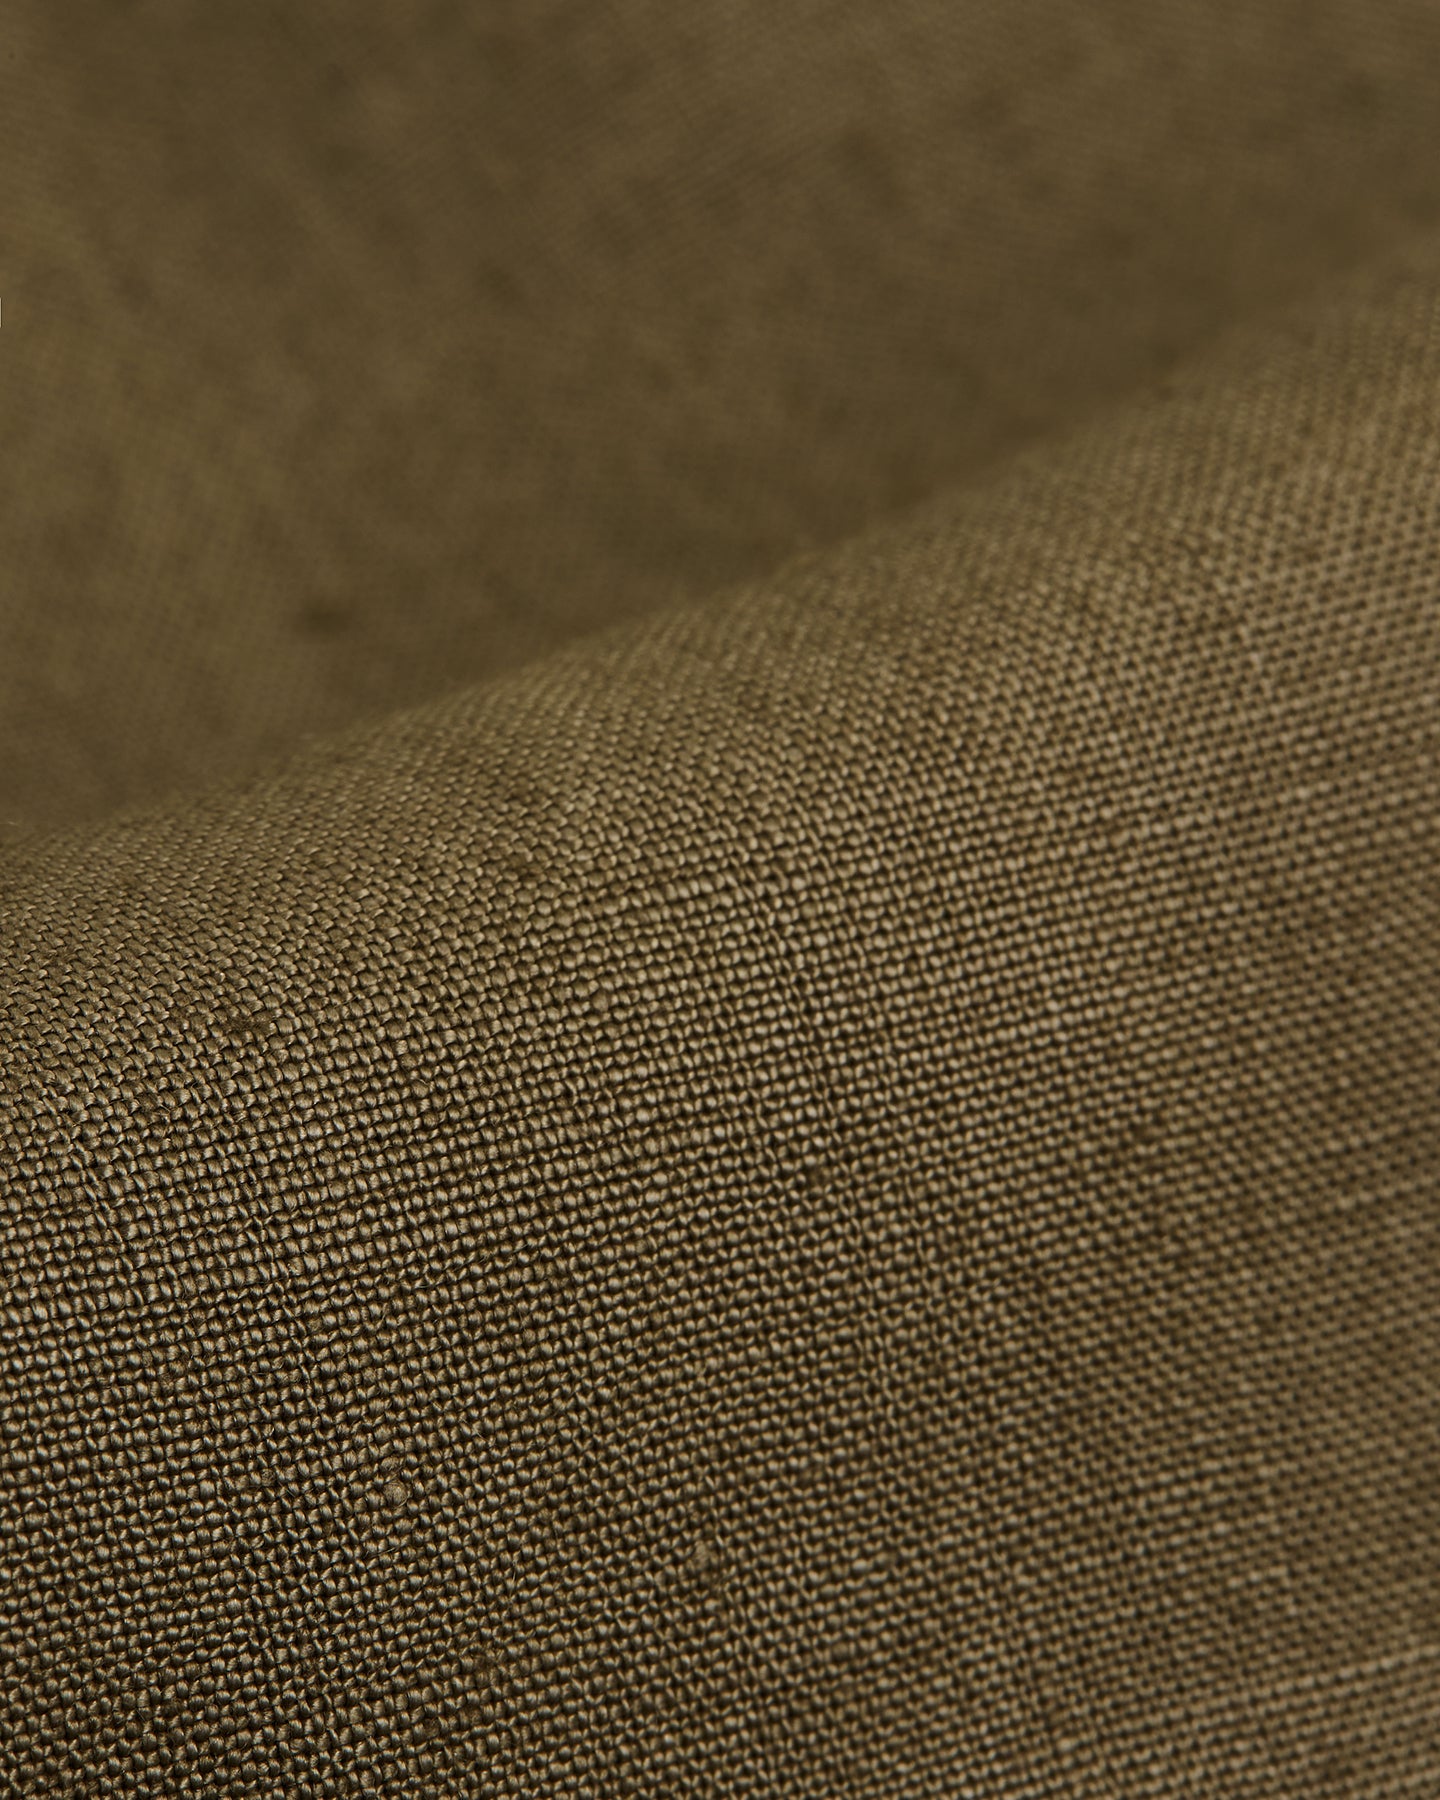 Olive brown Irish linen fabric